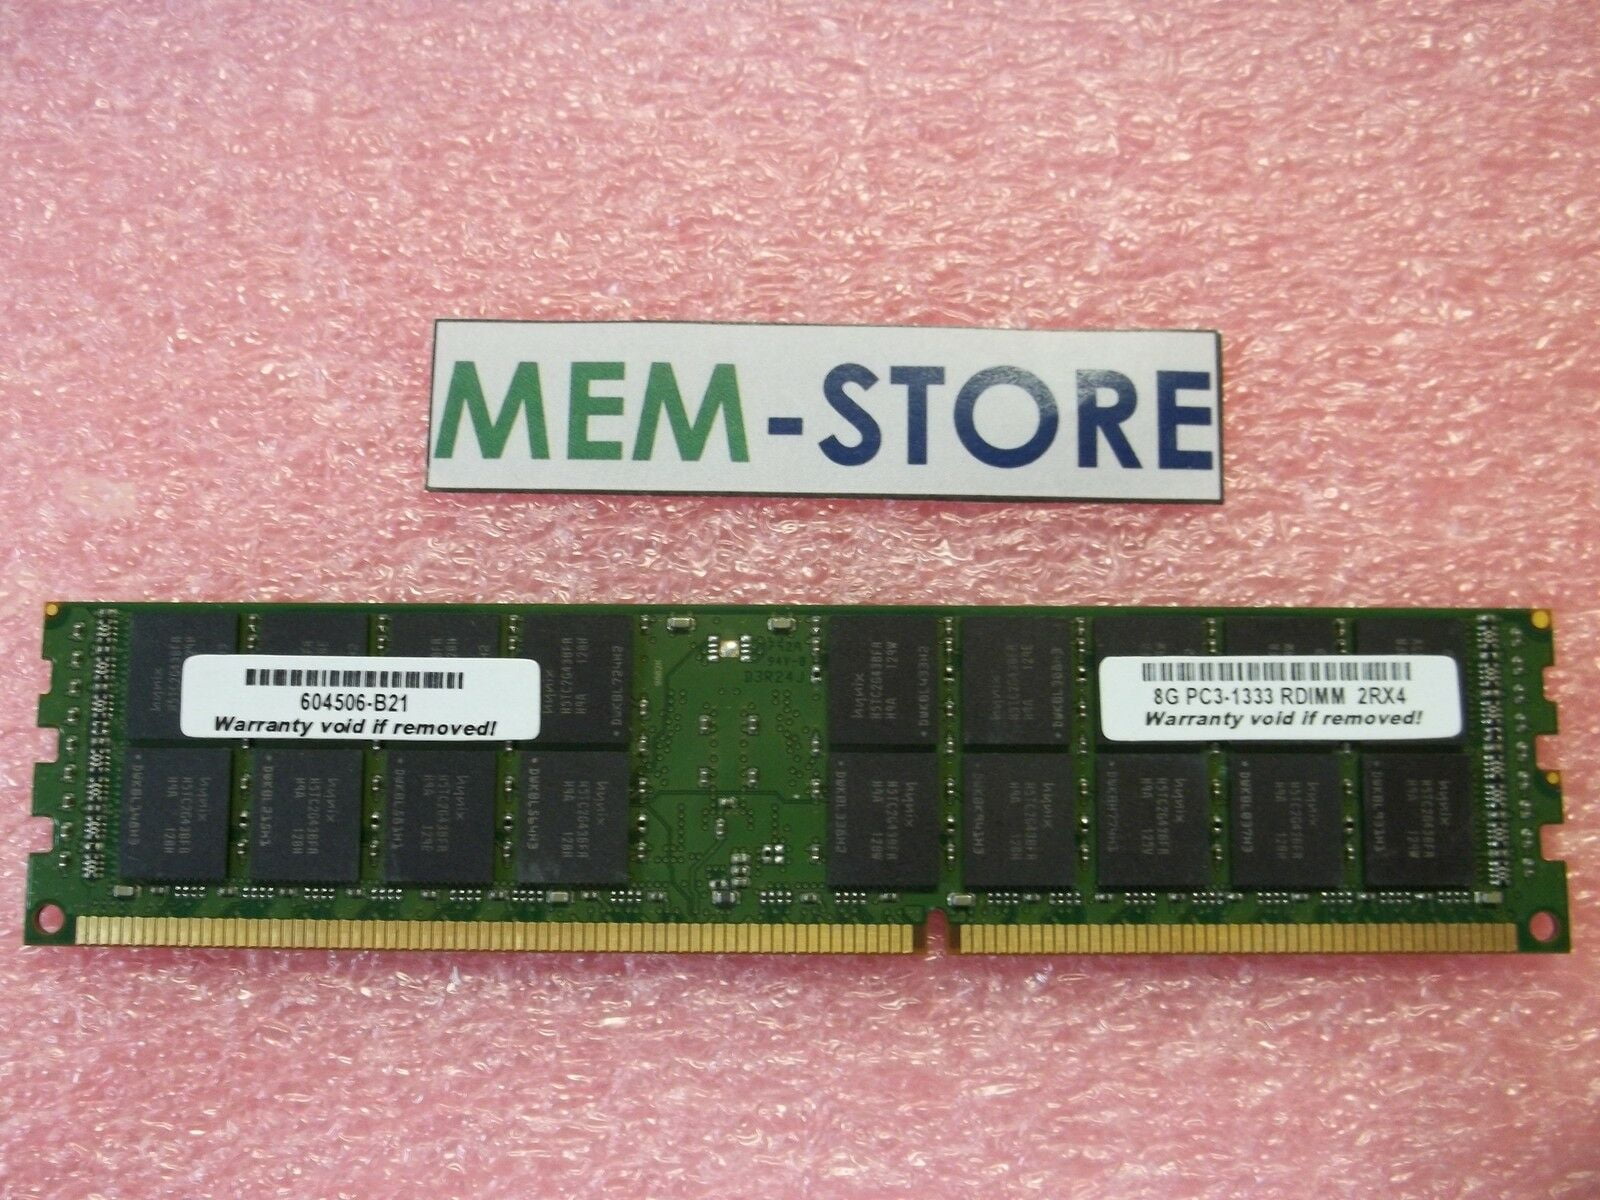 Memory DDR3 PC3-10600 ECC REG HP Compatible Compaq ProLiant DL360 G7 New 2x4GB MemoryMasters NOT for PC/MAC 8GB